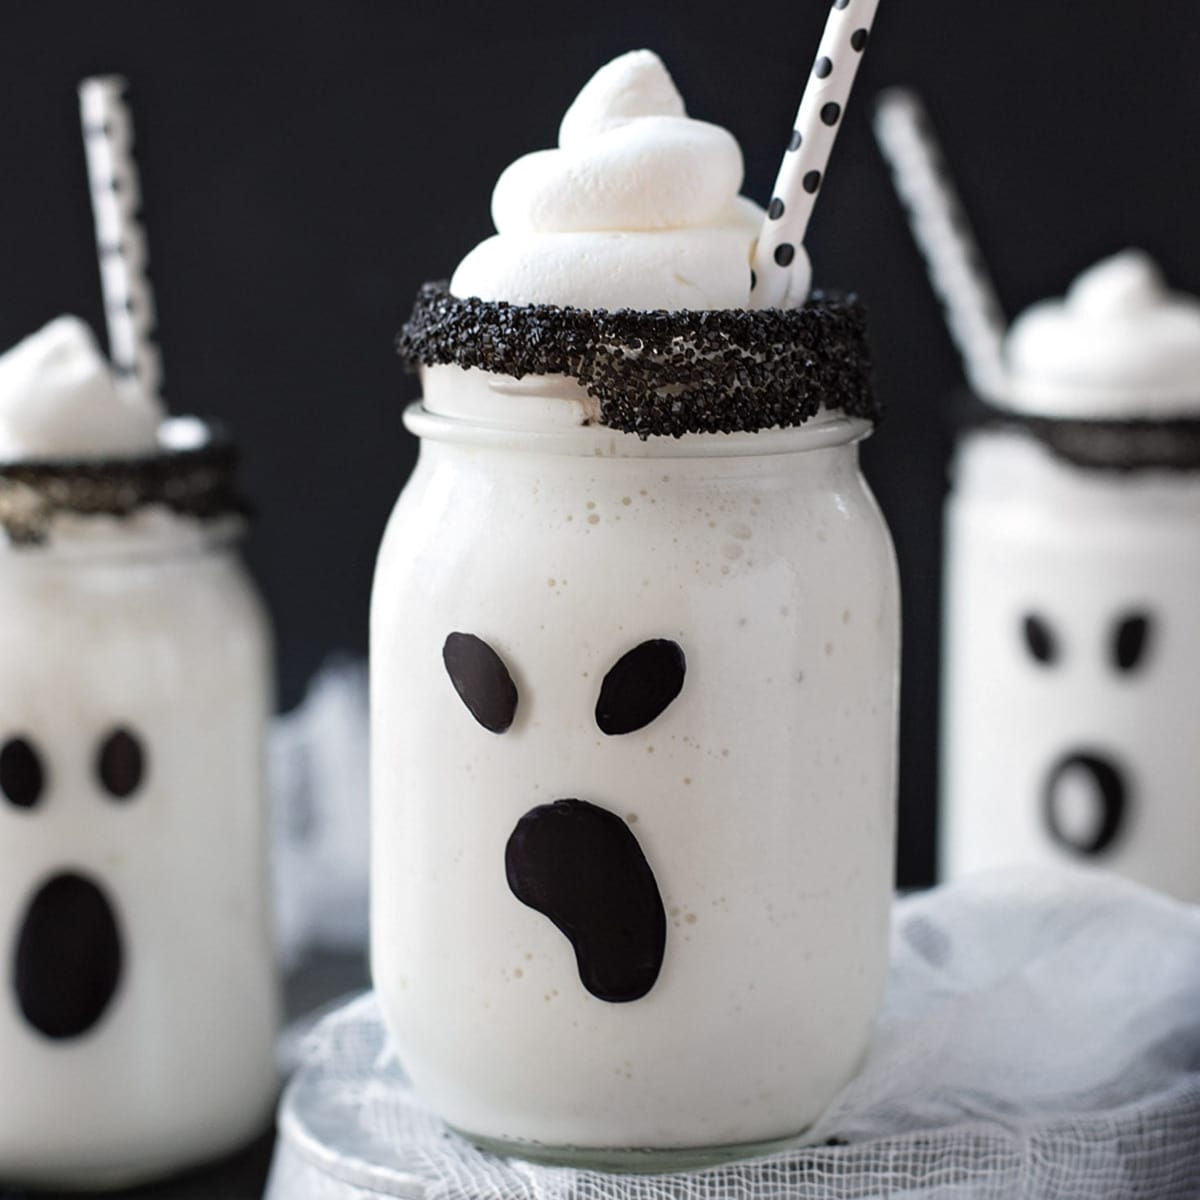 Halloween desserts - boo-nilla ghost milkshakes served in decorate glass jars.